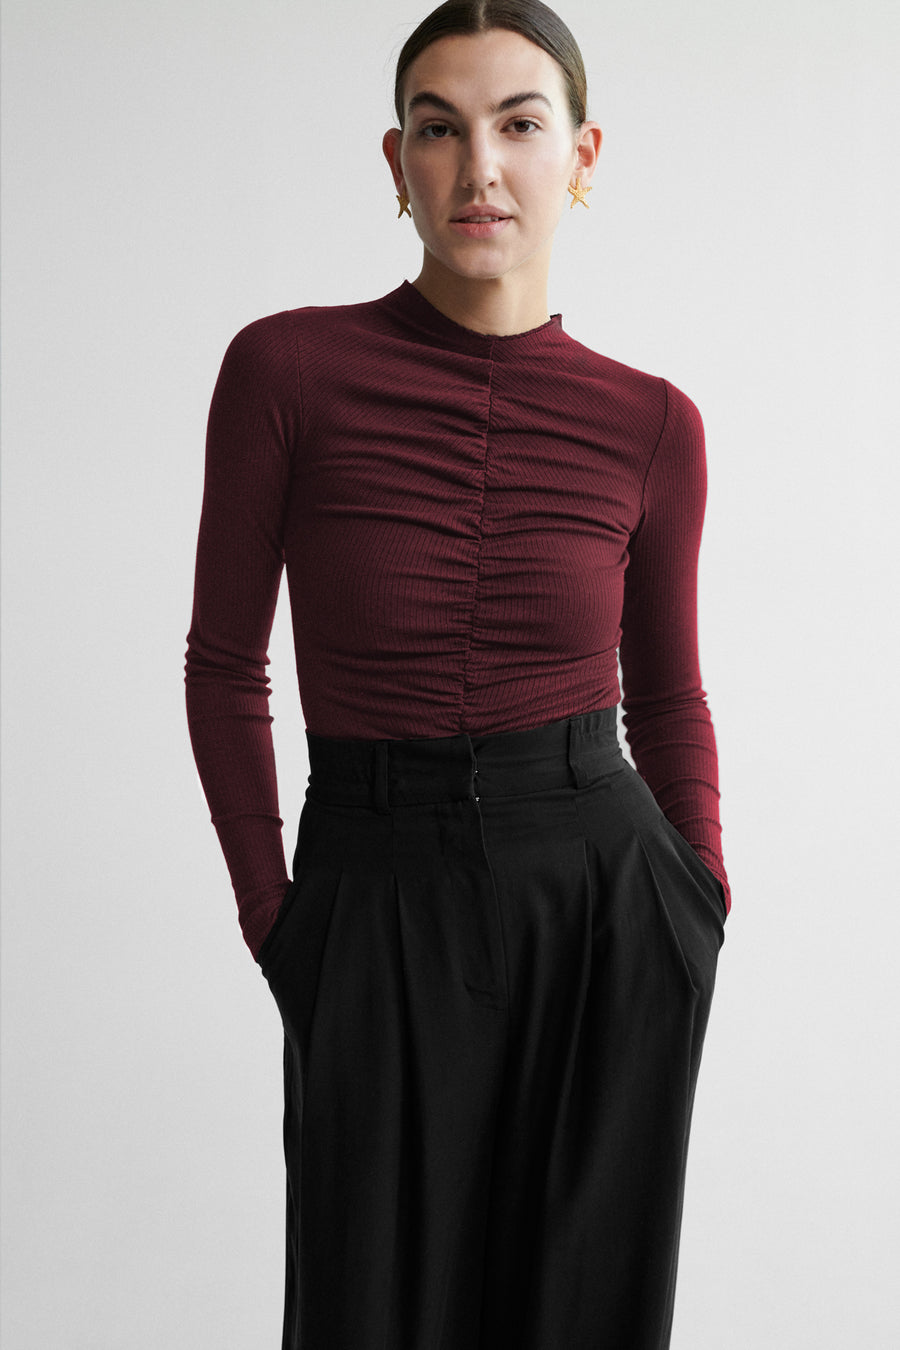 Bodysuit in organic cotton featuring gathered detail / 01 / 37 / merlot red